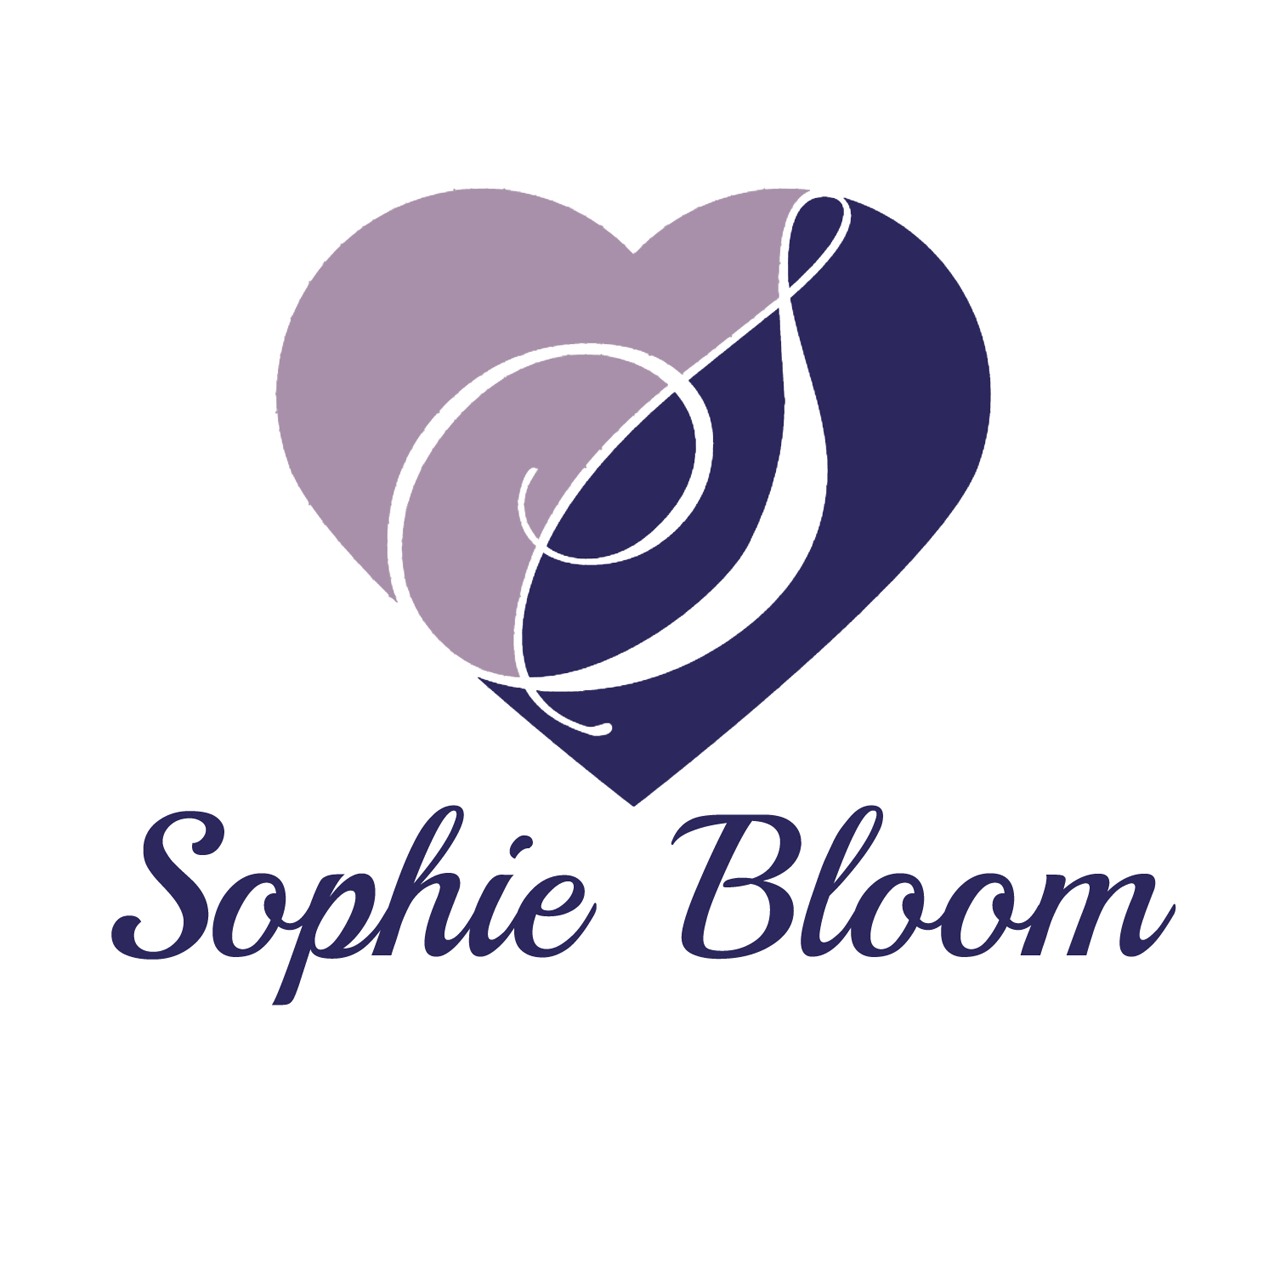 Sophie Bloom - profile image - 1.